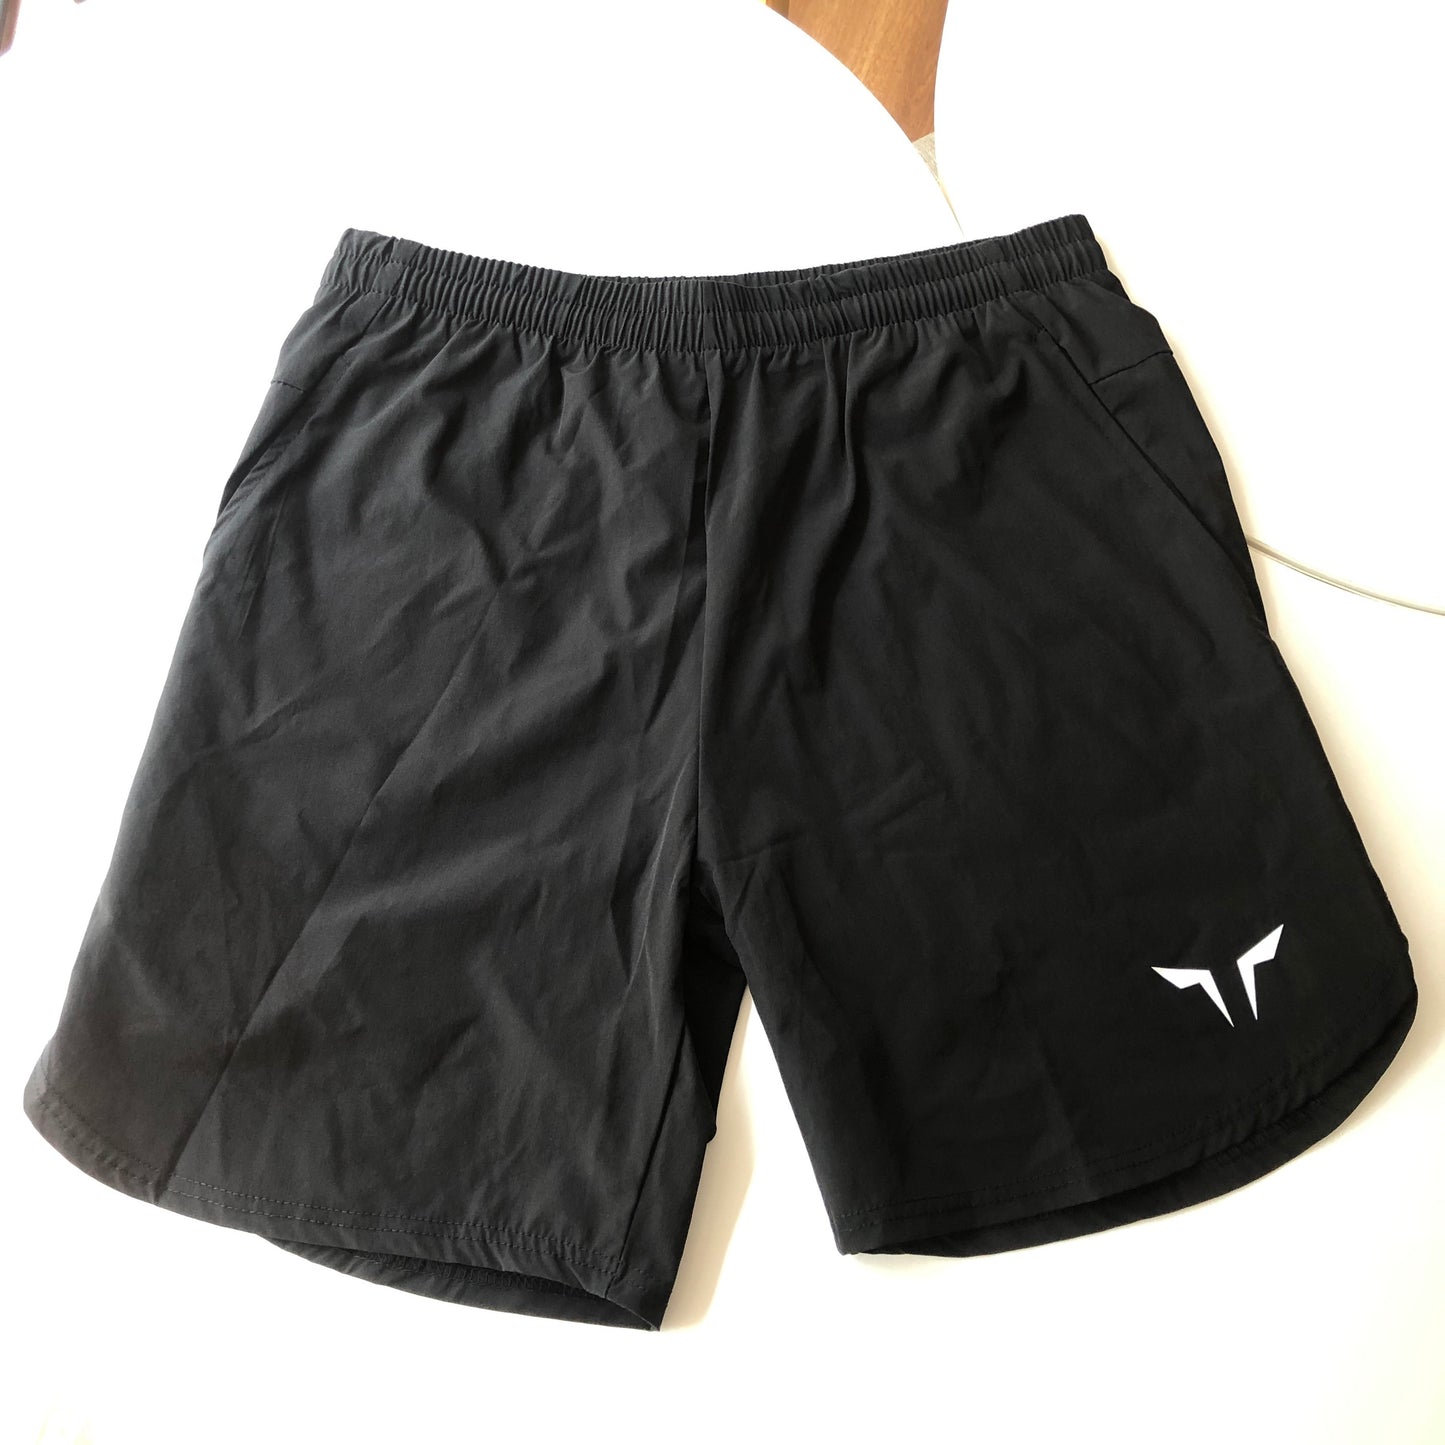 Limitless Quick Dry Men's Shorts - Black